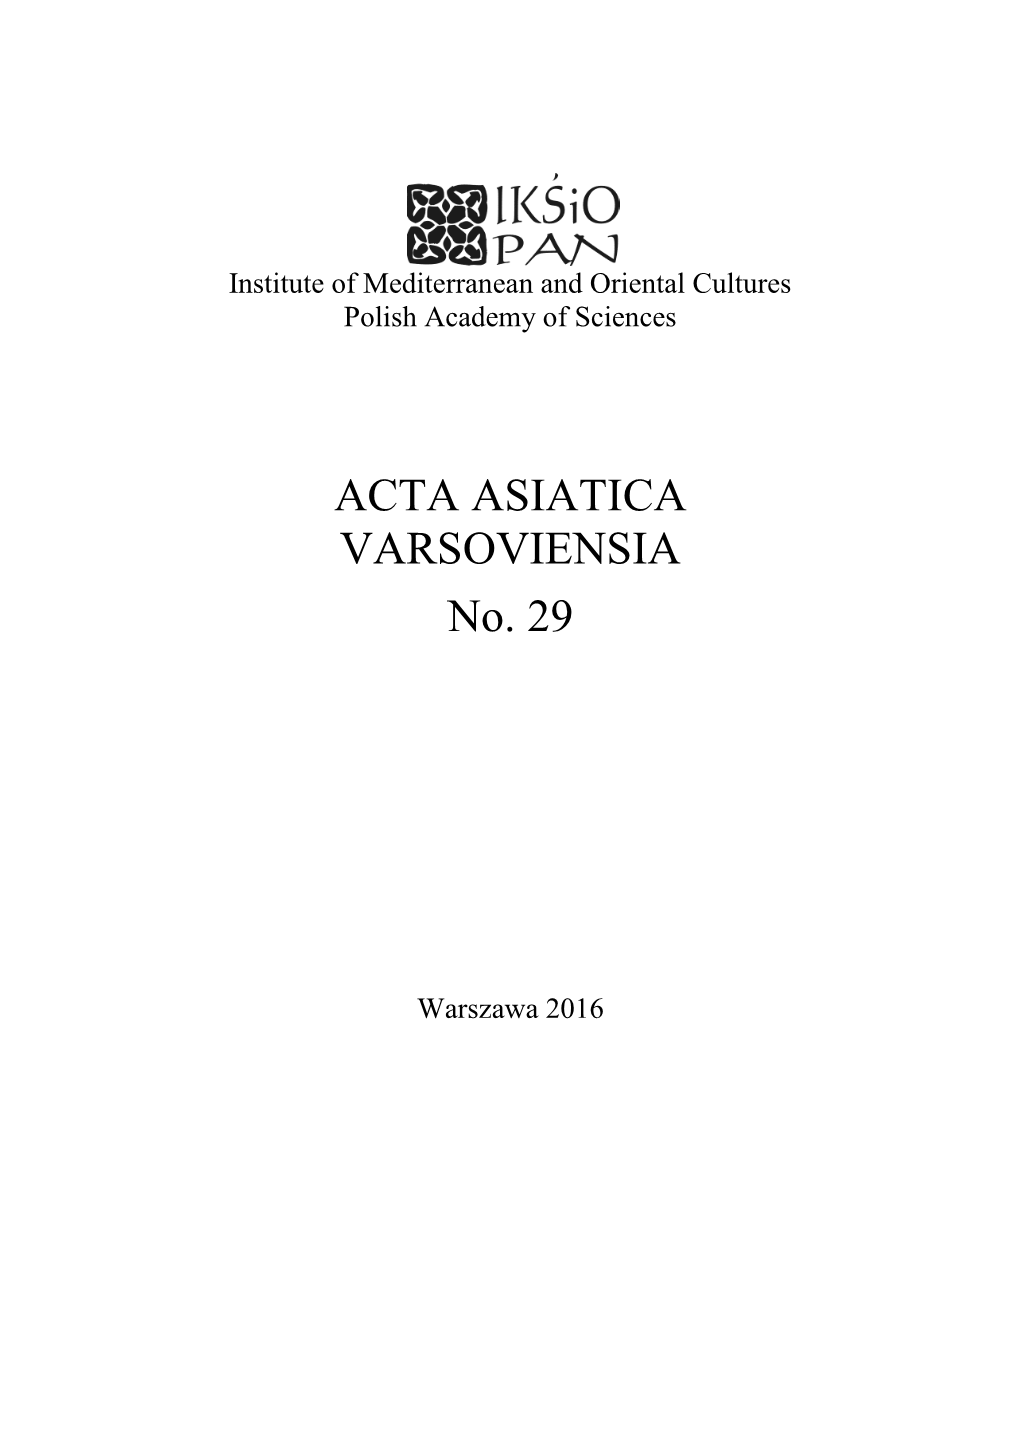 ACTA ASIATICA VARSOVIENSIA No. 29